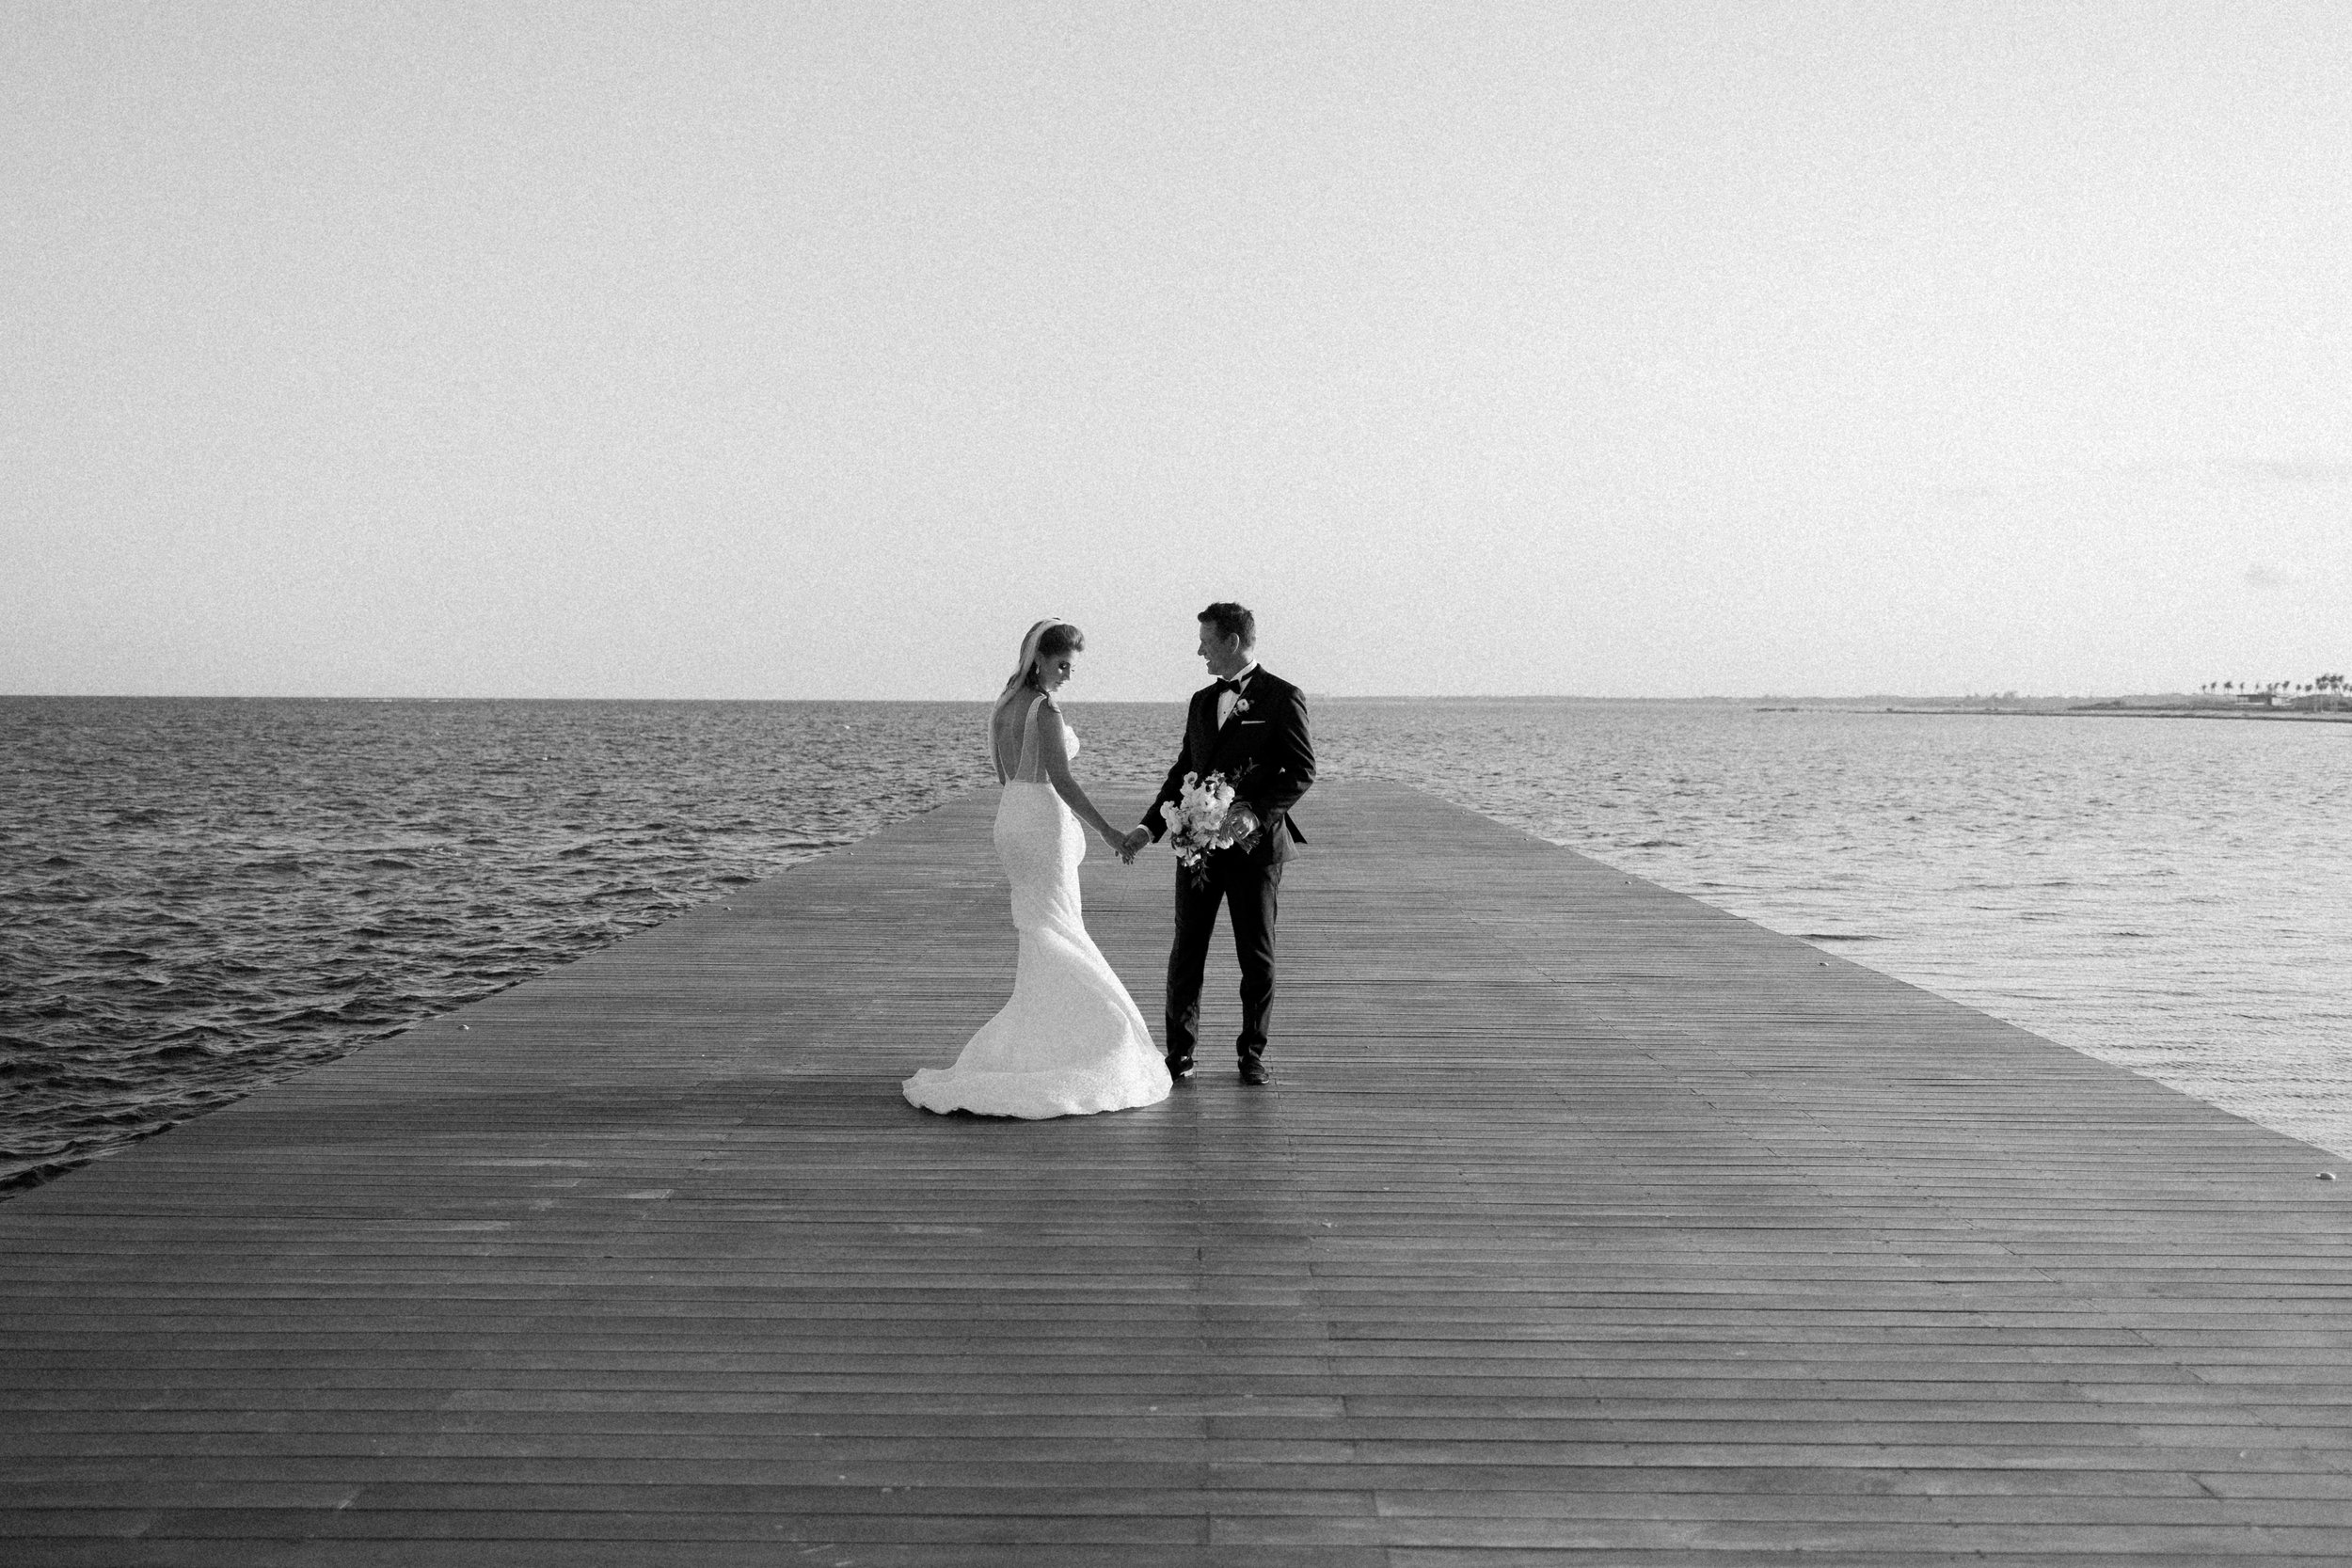 D&J_WeddingDestination_FabrizioSimoneenFotografo_Weddingday0679.jpg